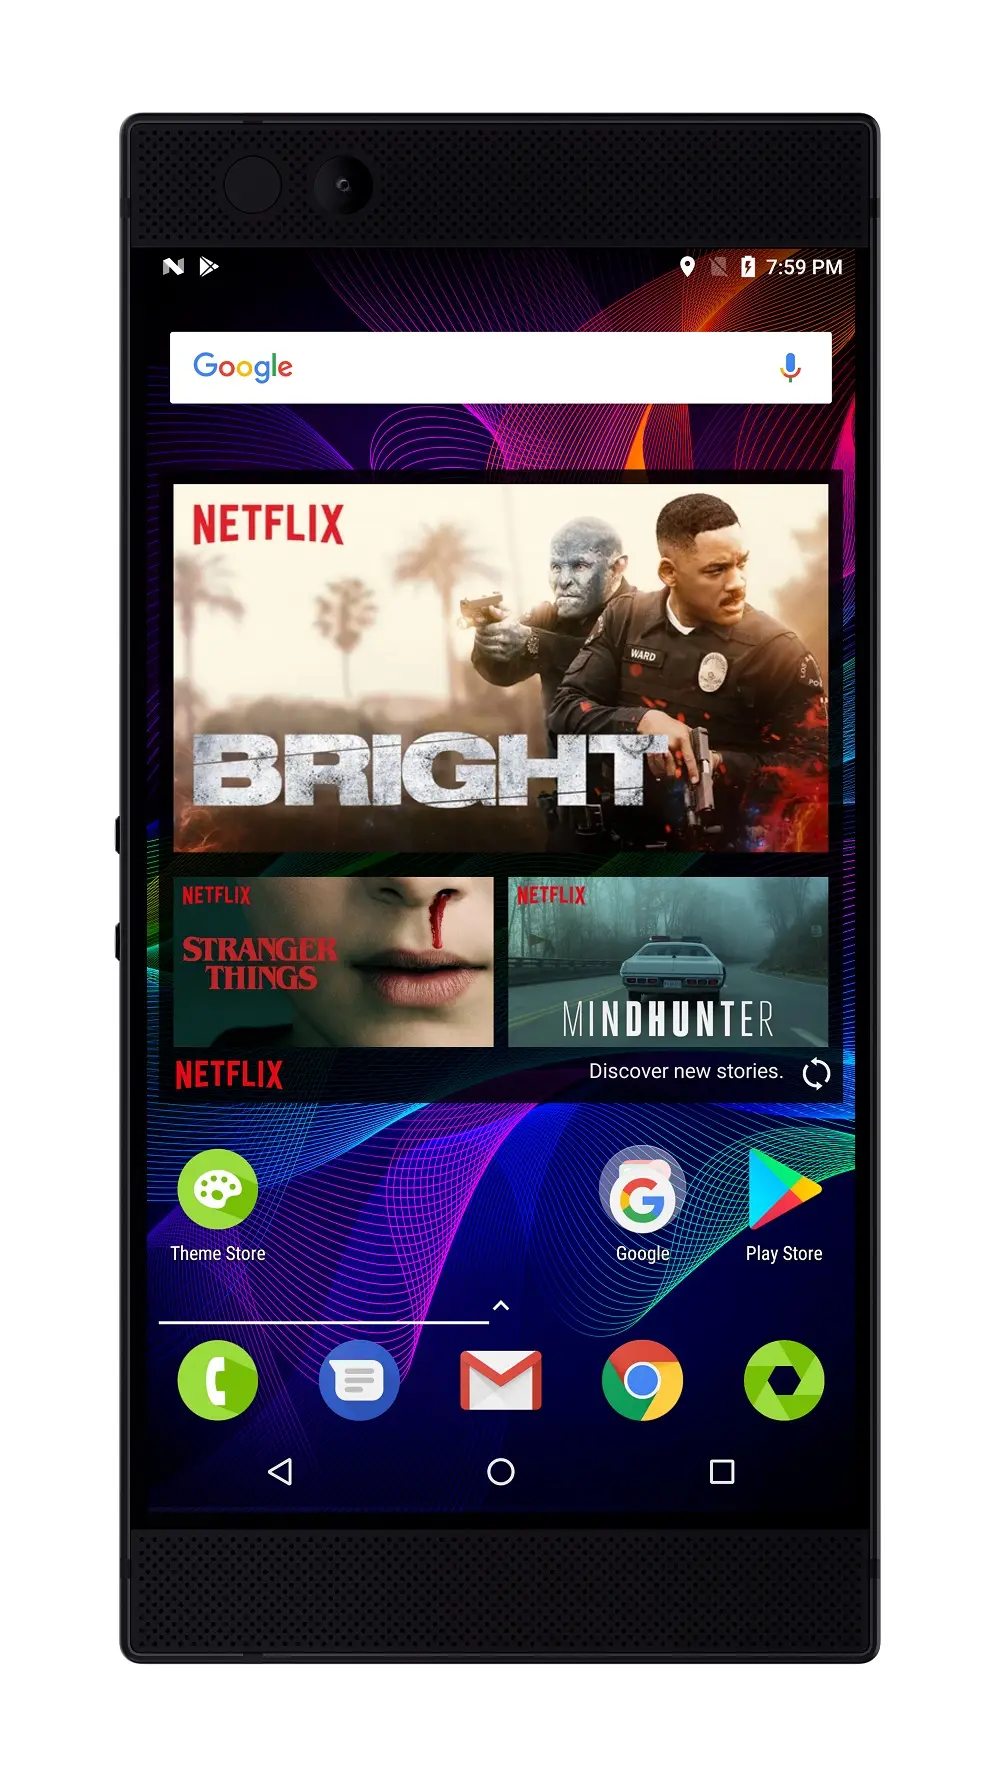 RAZER PHONE, ahora con Netflix HDR y Dolby Digital Plus 5.1 #CES18